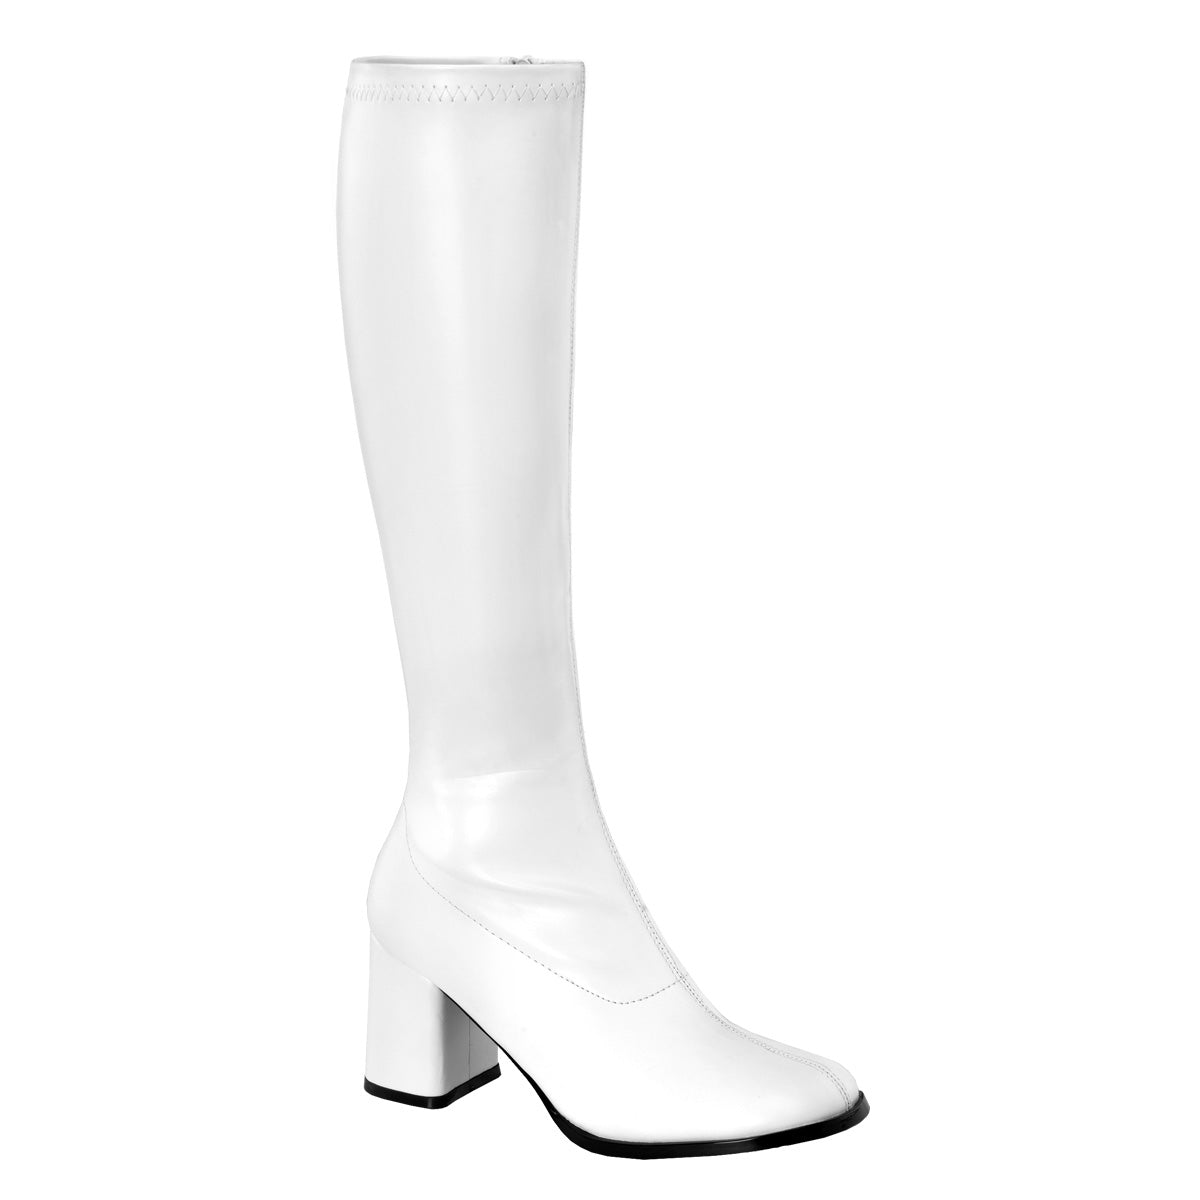 GOGO-300 FUNTASMA 3 inch hak witte octrooi vrouwen laarzen